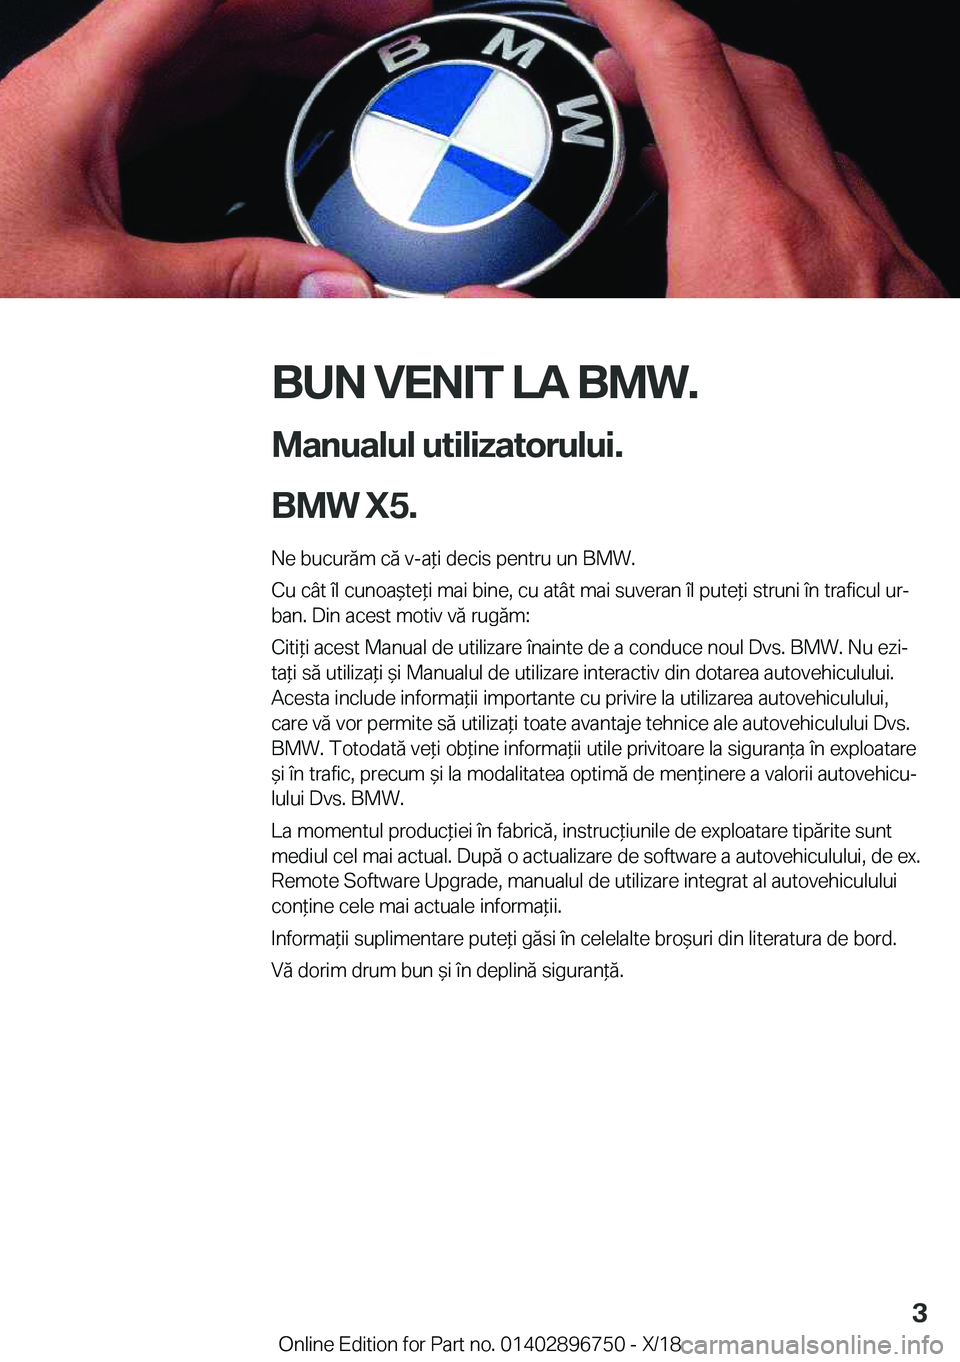 BMW X5 2019  Ghiduri De Utilizare (in Romanian) �B�U�N��V�E�N�I�T��L�A��B�M�W�.�M�a�n�u�a�l�u�l��u�t�i�l�i�z�a�t�o�r�u�l�u�i�.
�B�M�W��X�5�. �N�e��b�u�c�u�r�